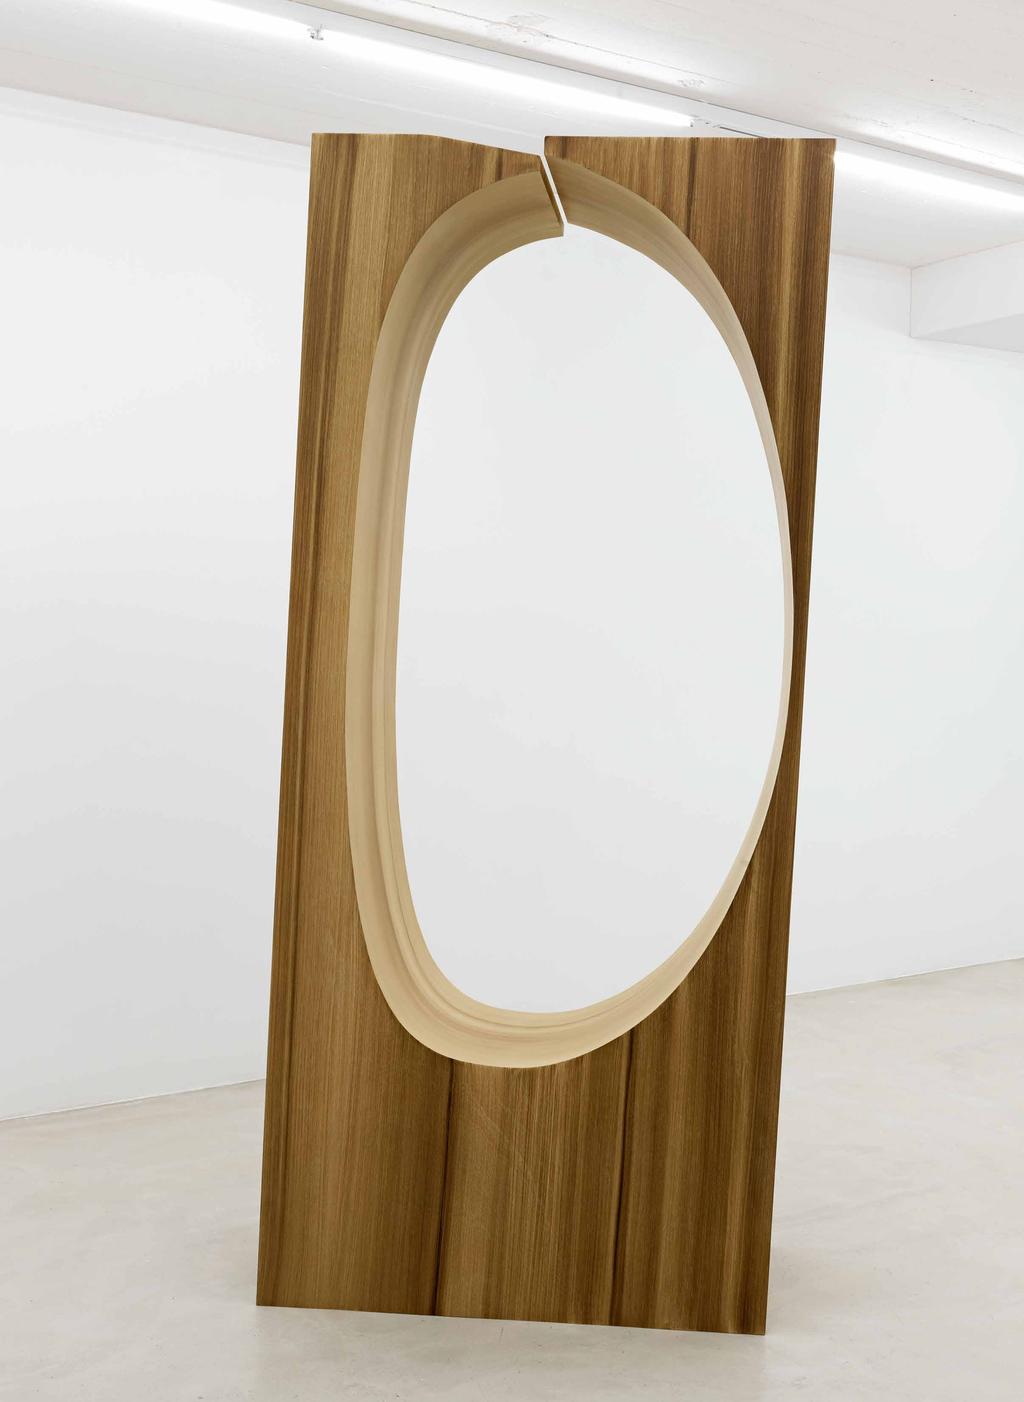 Schnitt, 2013 Öl auf Sperrholz 125 x 60 x 290 cm